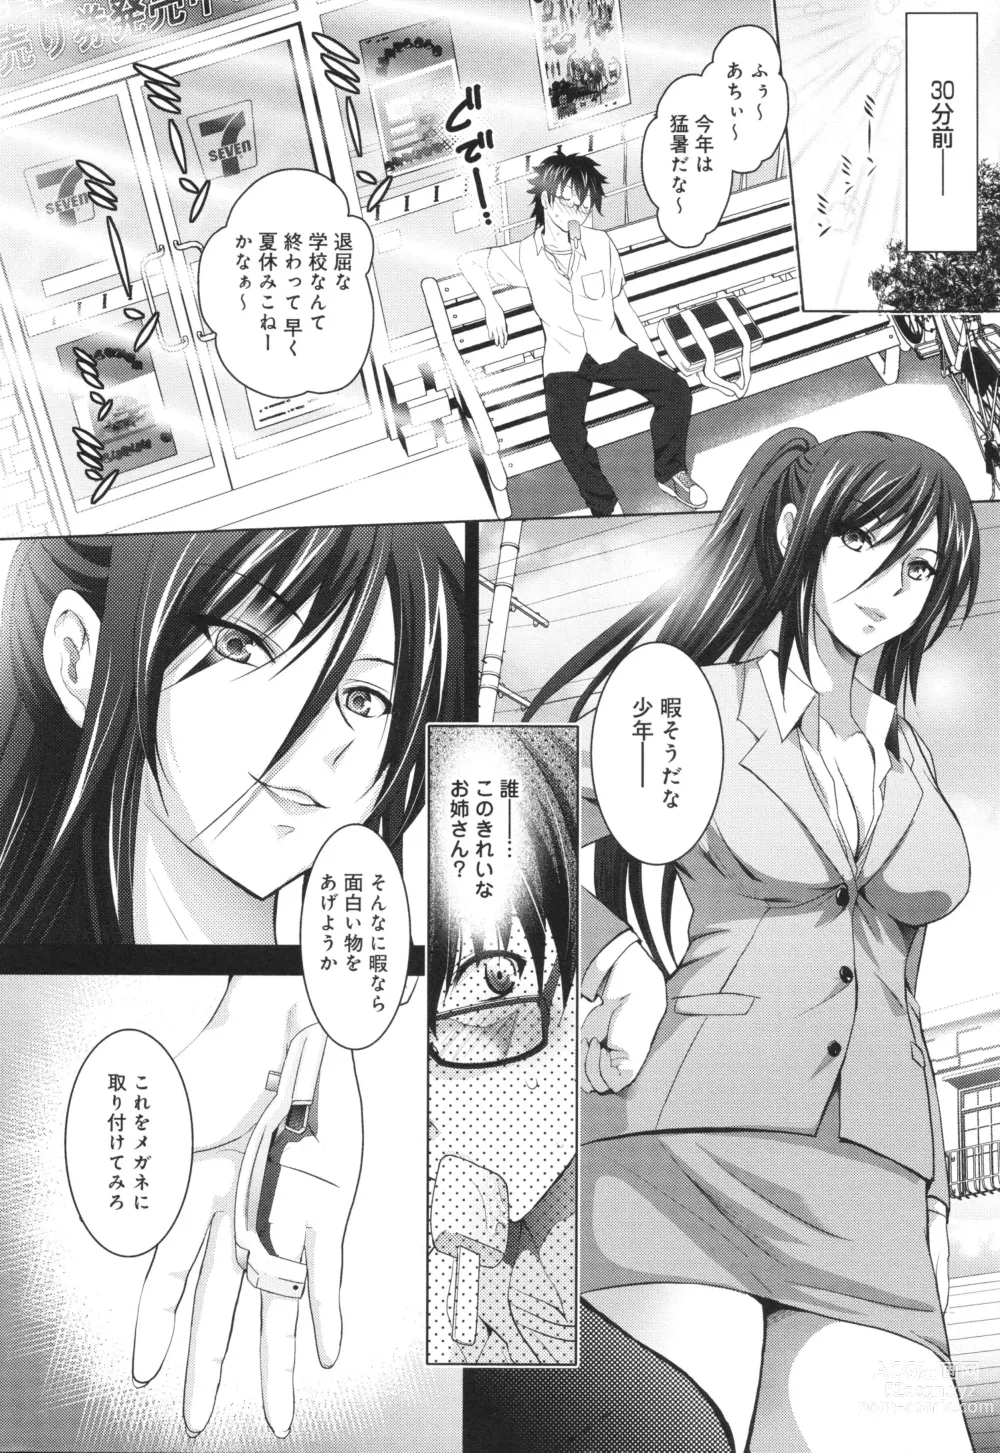 Page 11 of manga Hadaka no Panorama